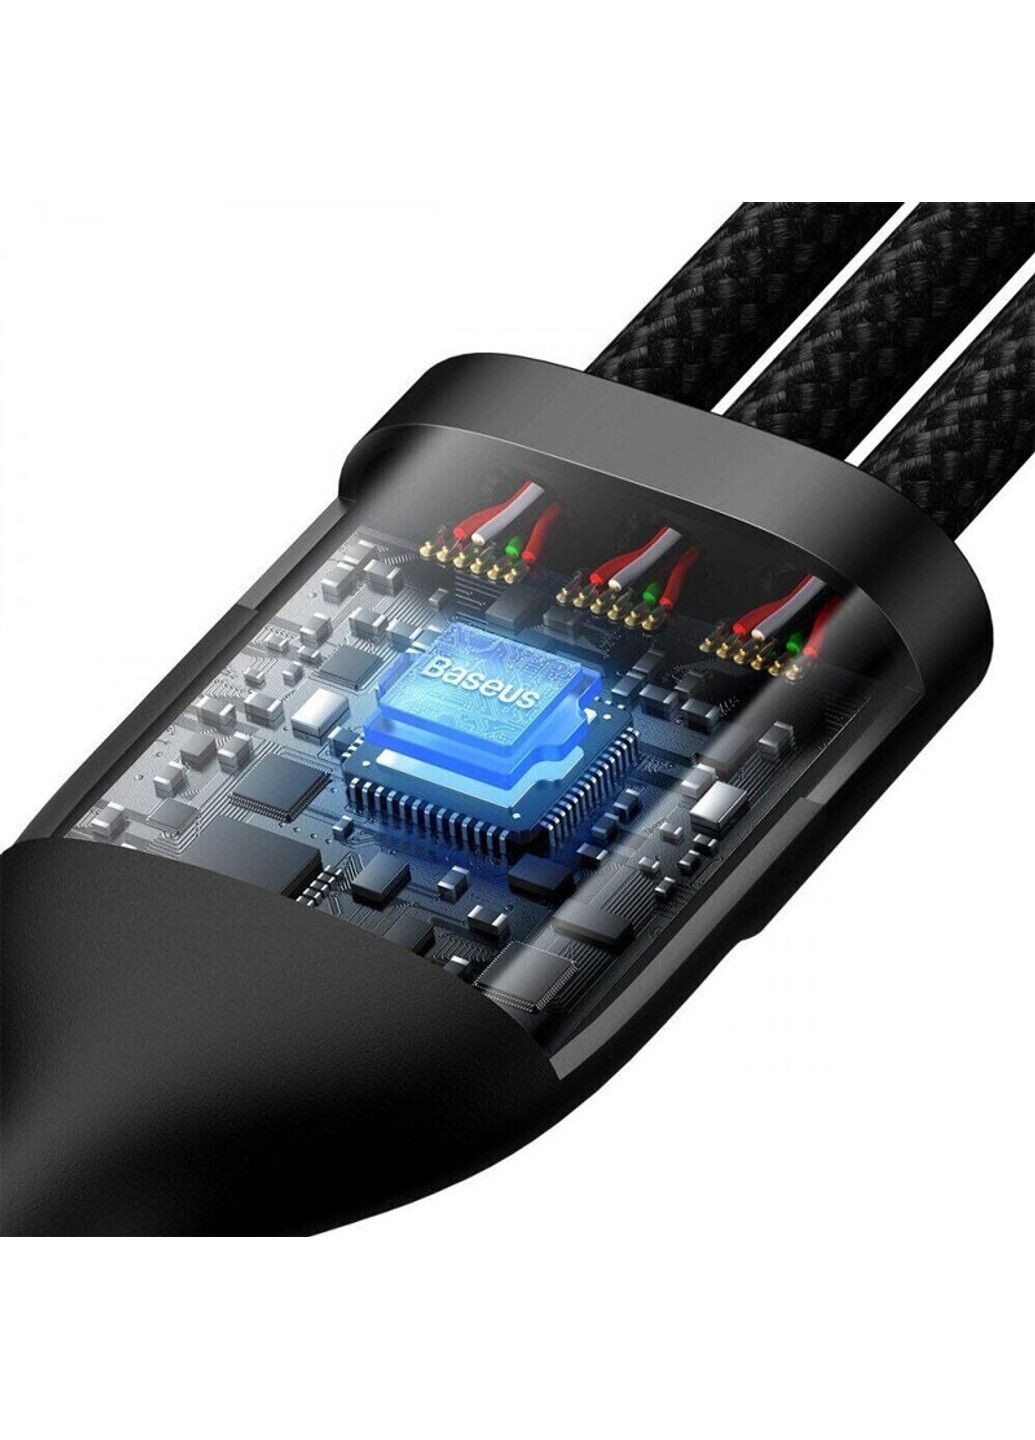 Дата кабель Flash Series 2 USB to MicroUSB-Lightning-Type-C 66W (1.2m) (CASS04000) Baseus (291880093)